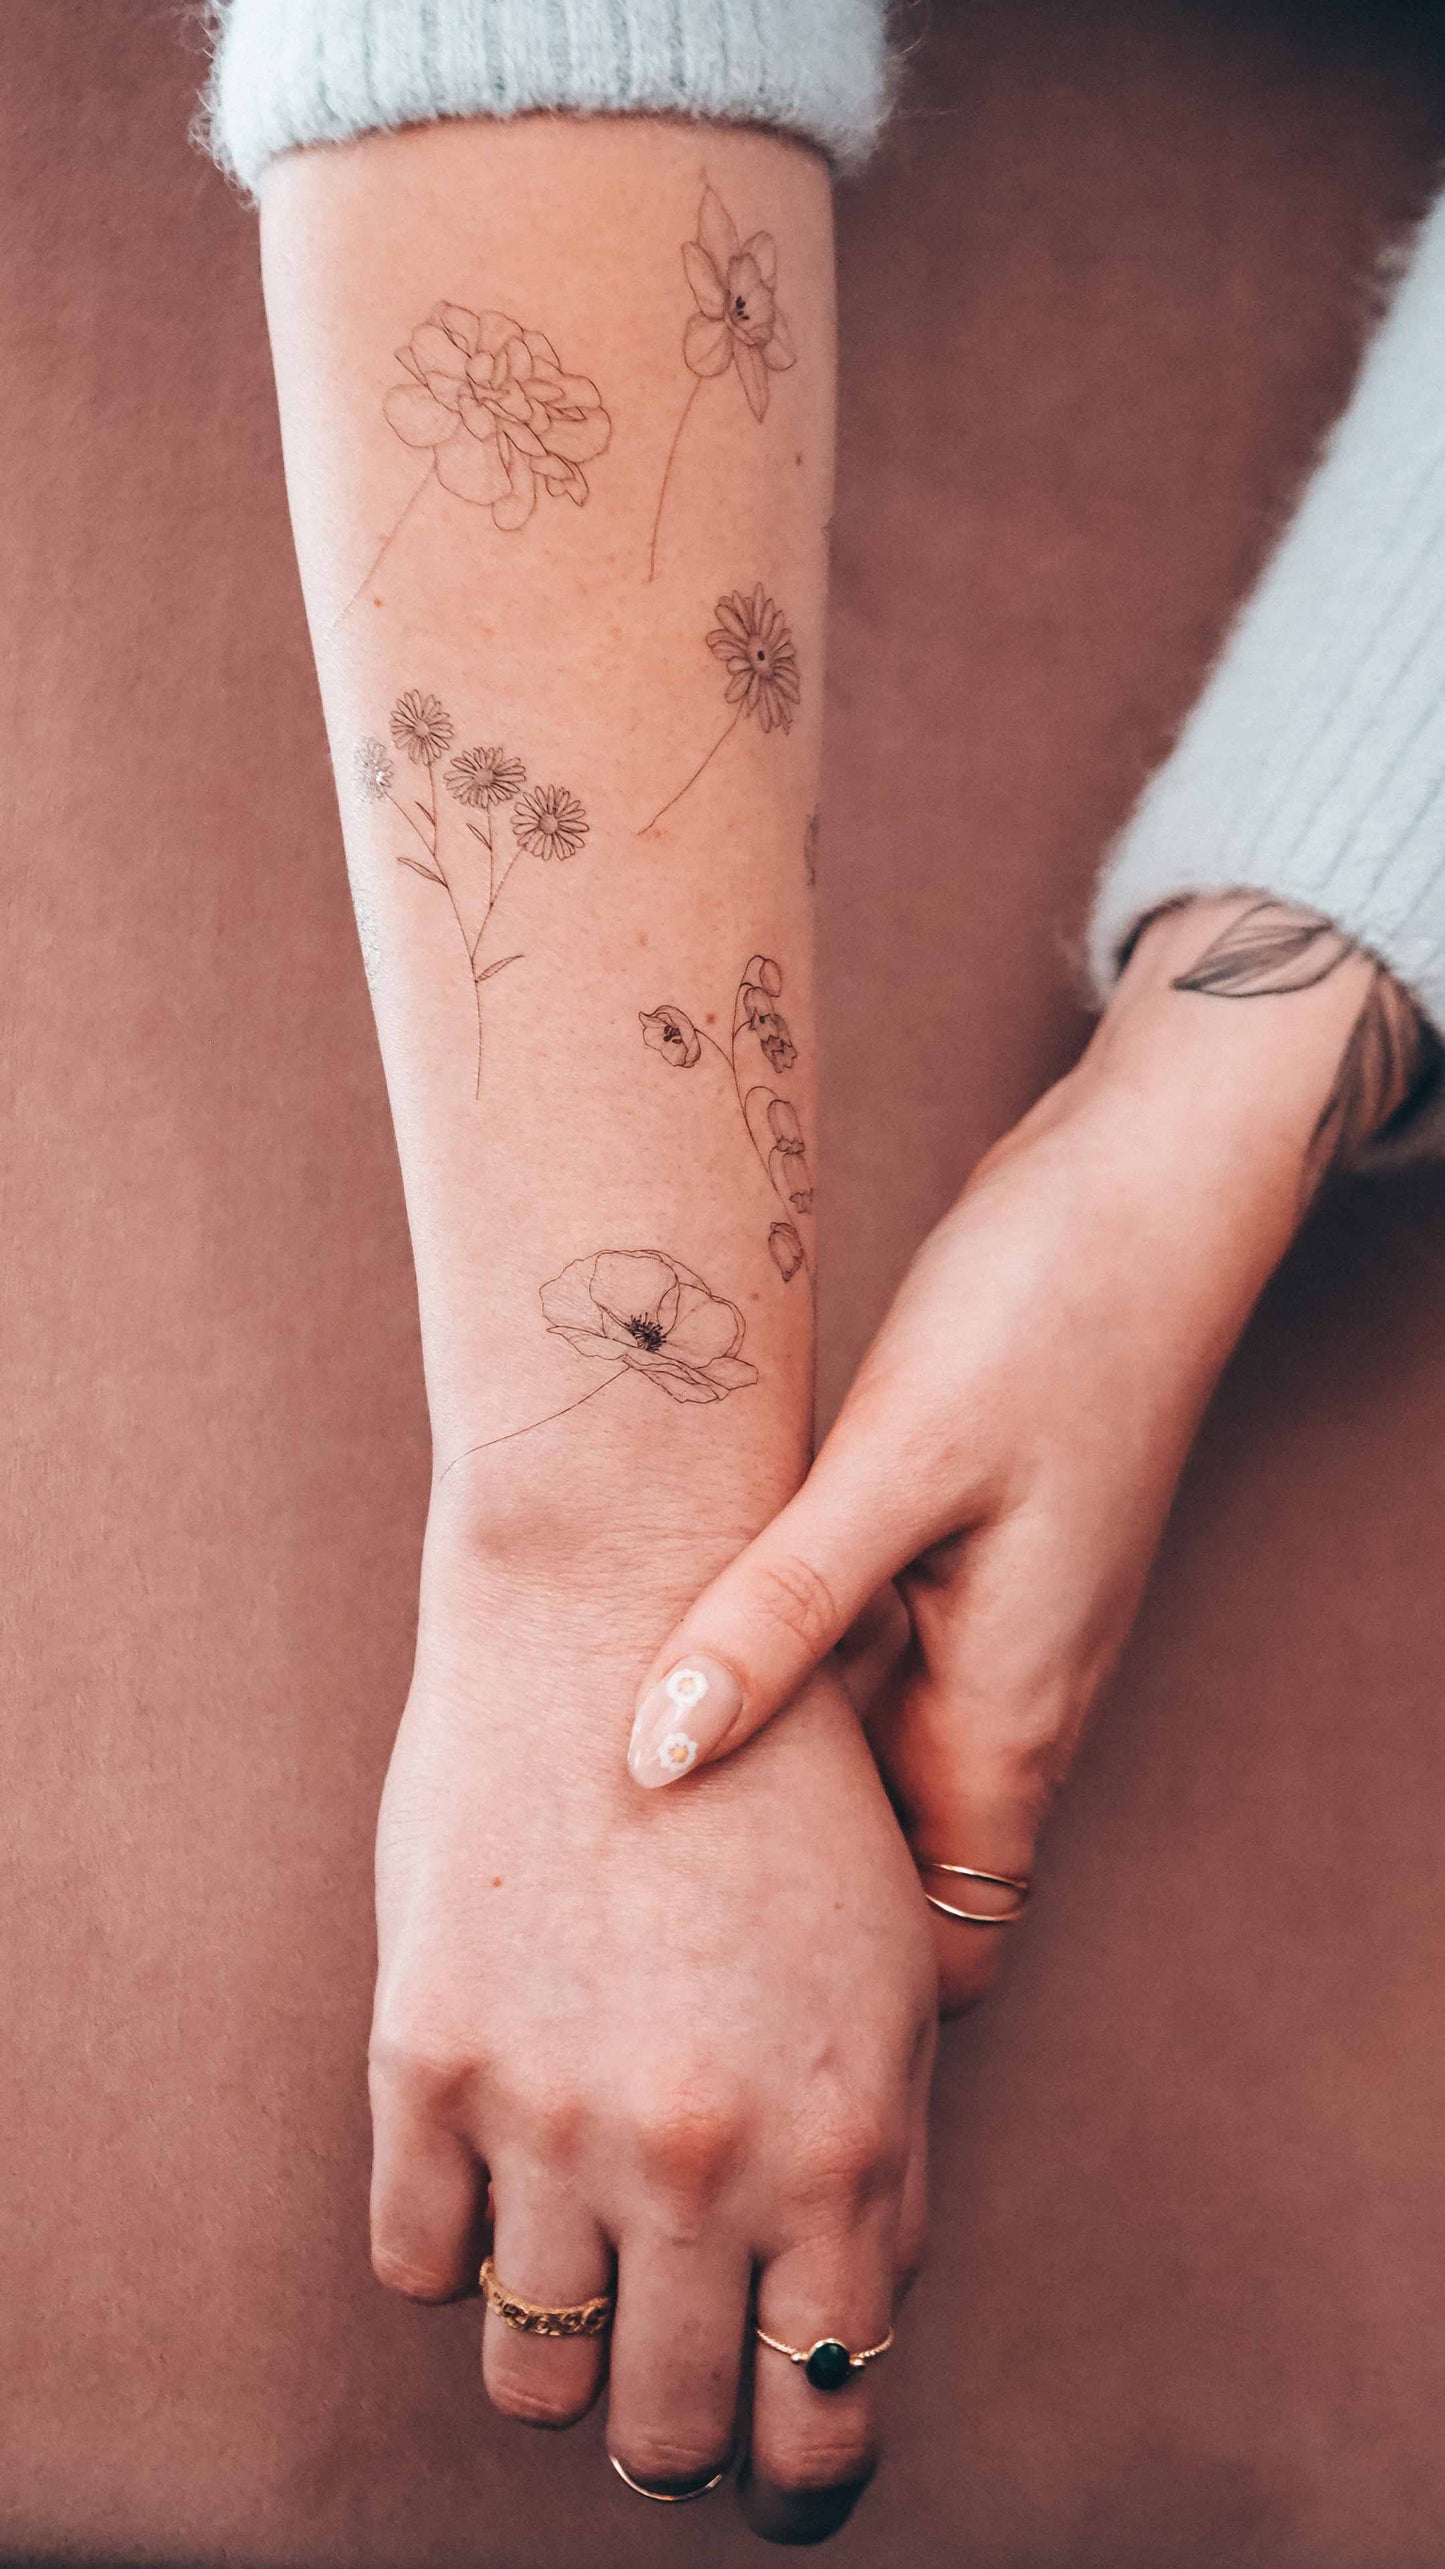 Birthflowers full year set, temporary tattoos